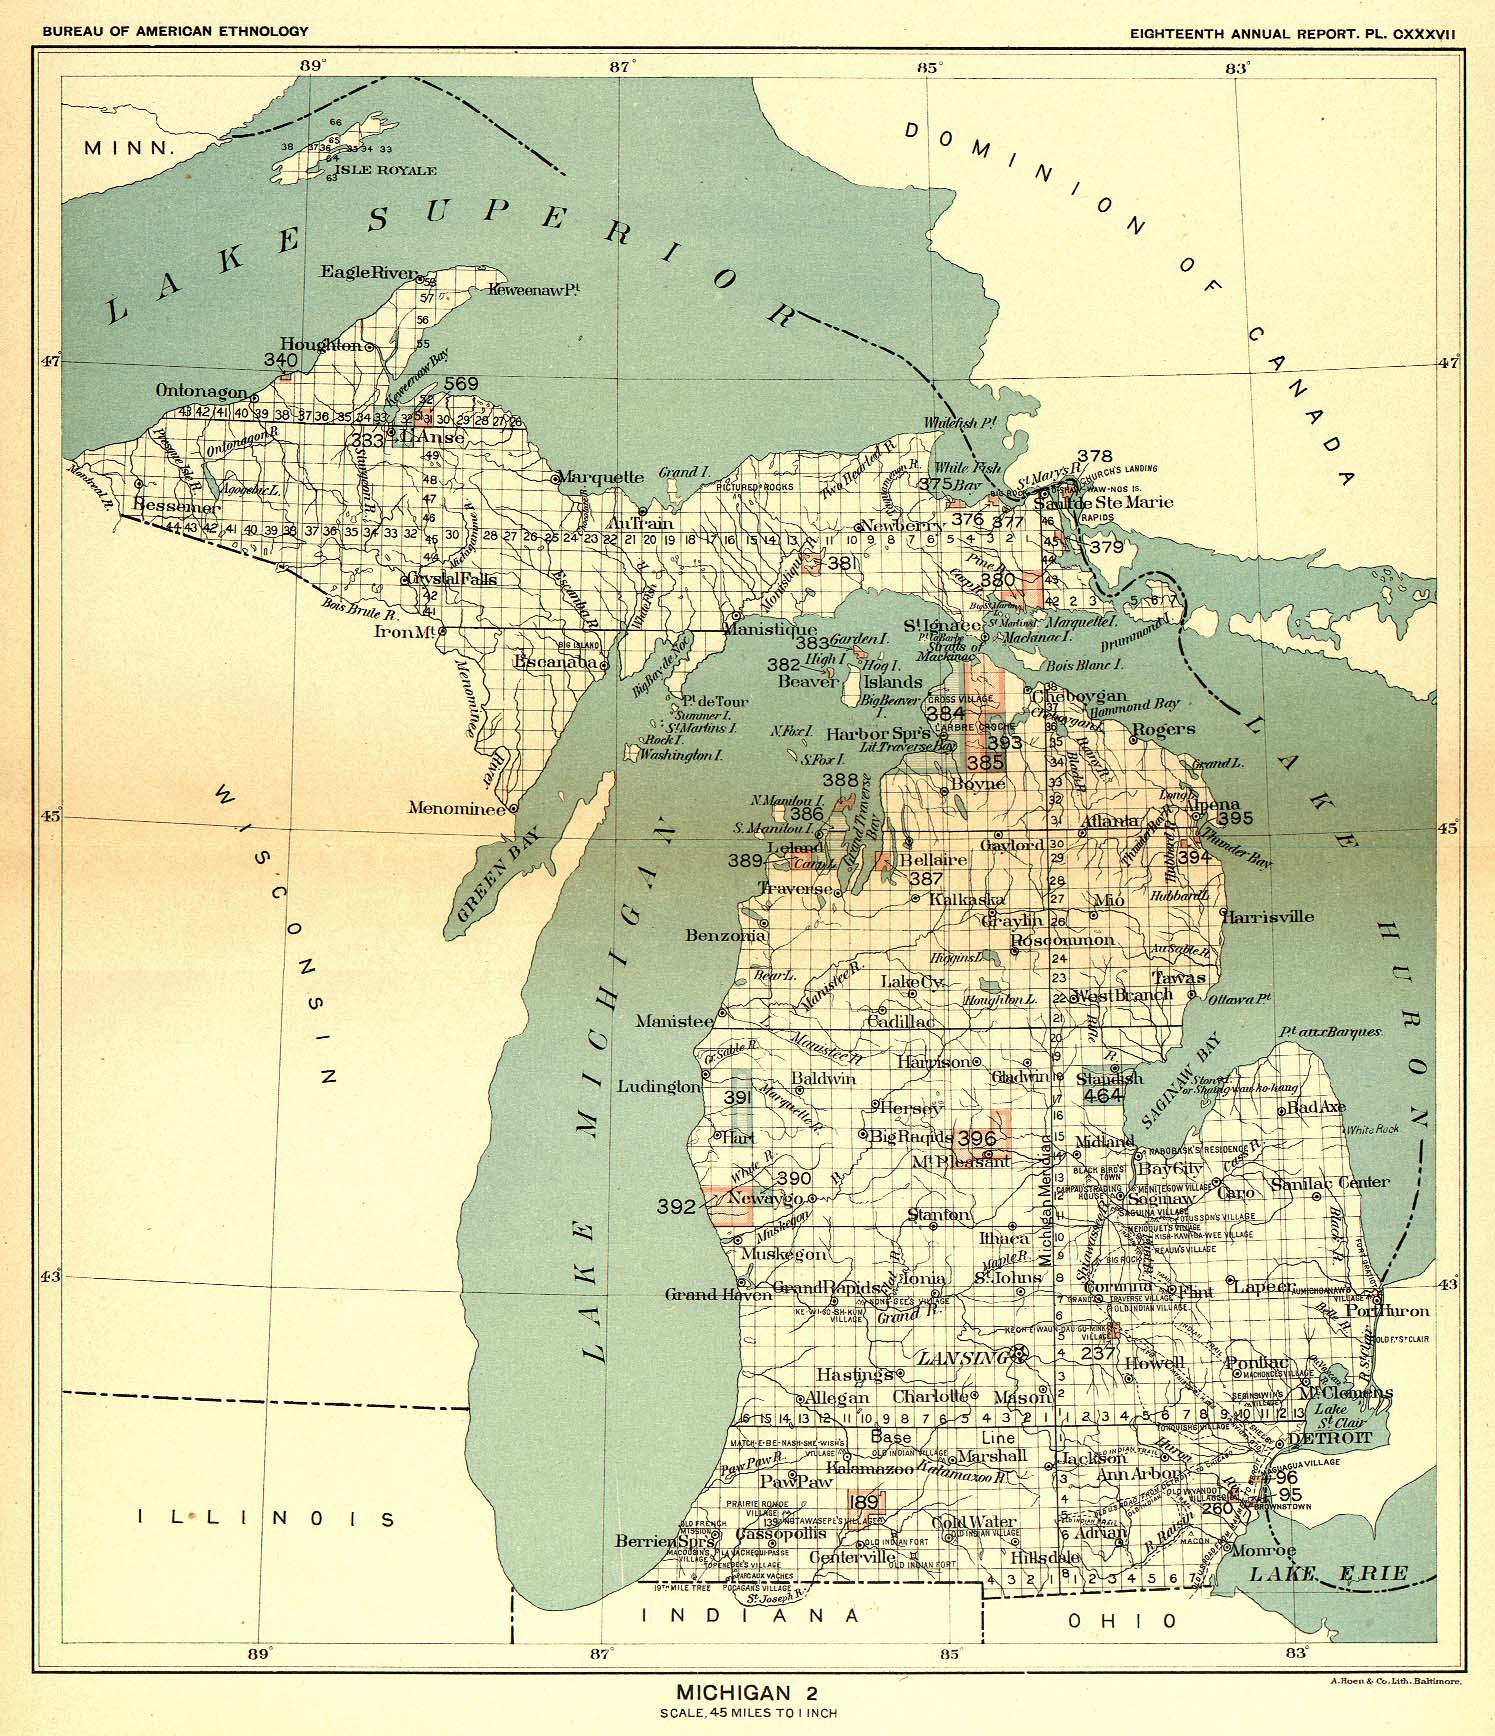 Michigan 2, Map 30